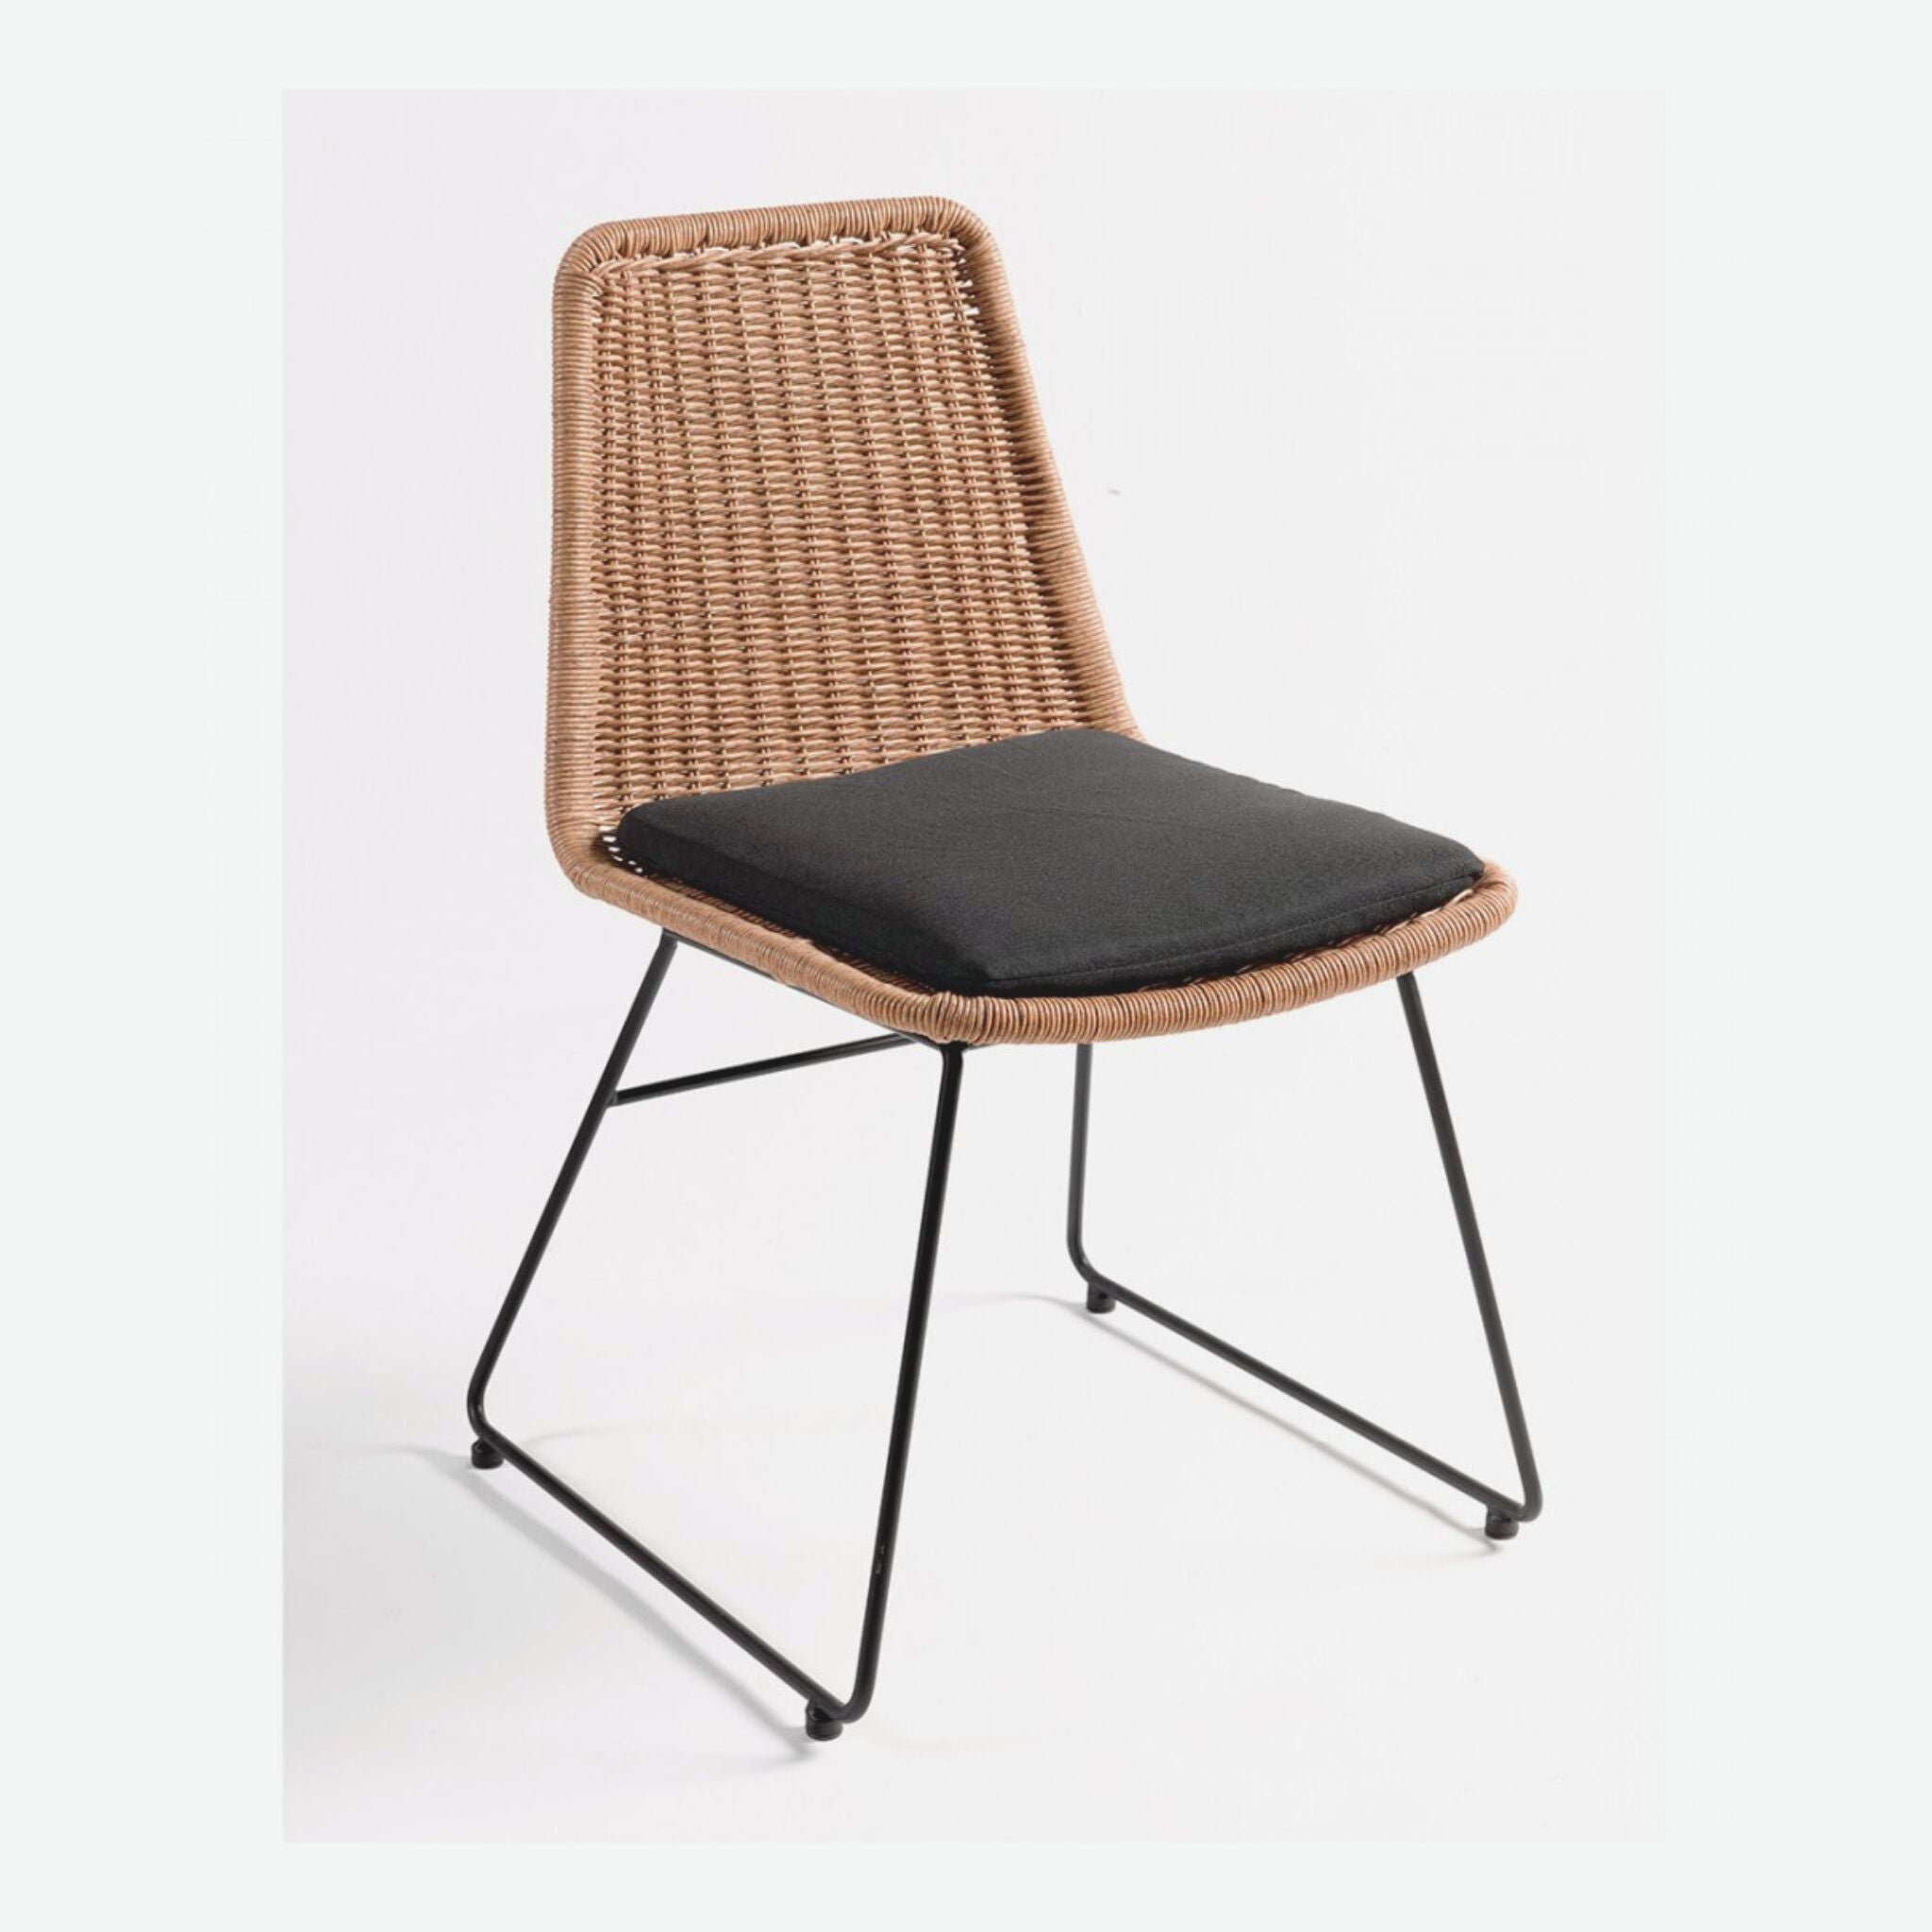 Crisal Decoracion CB6010-C-B Black Leg Synthetic Rattan Chair Set of 2